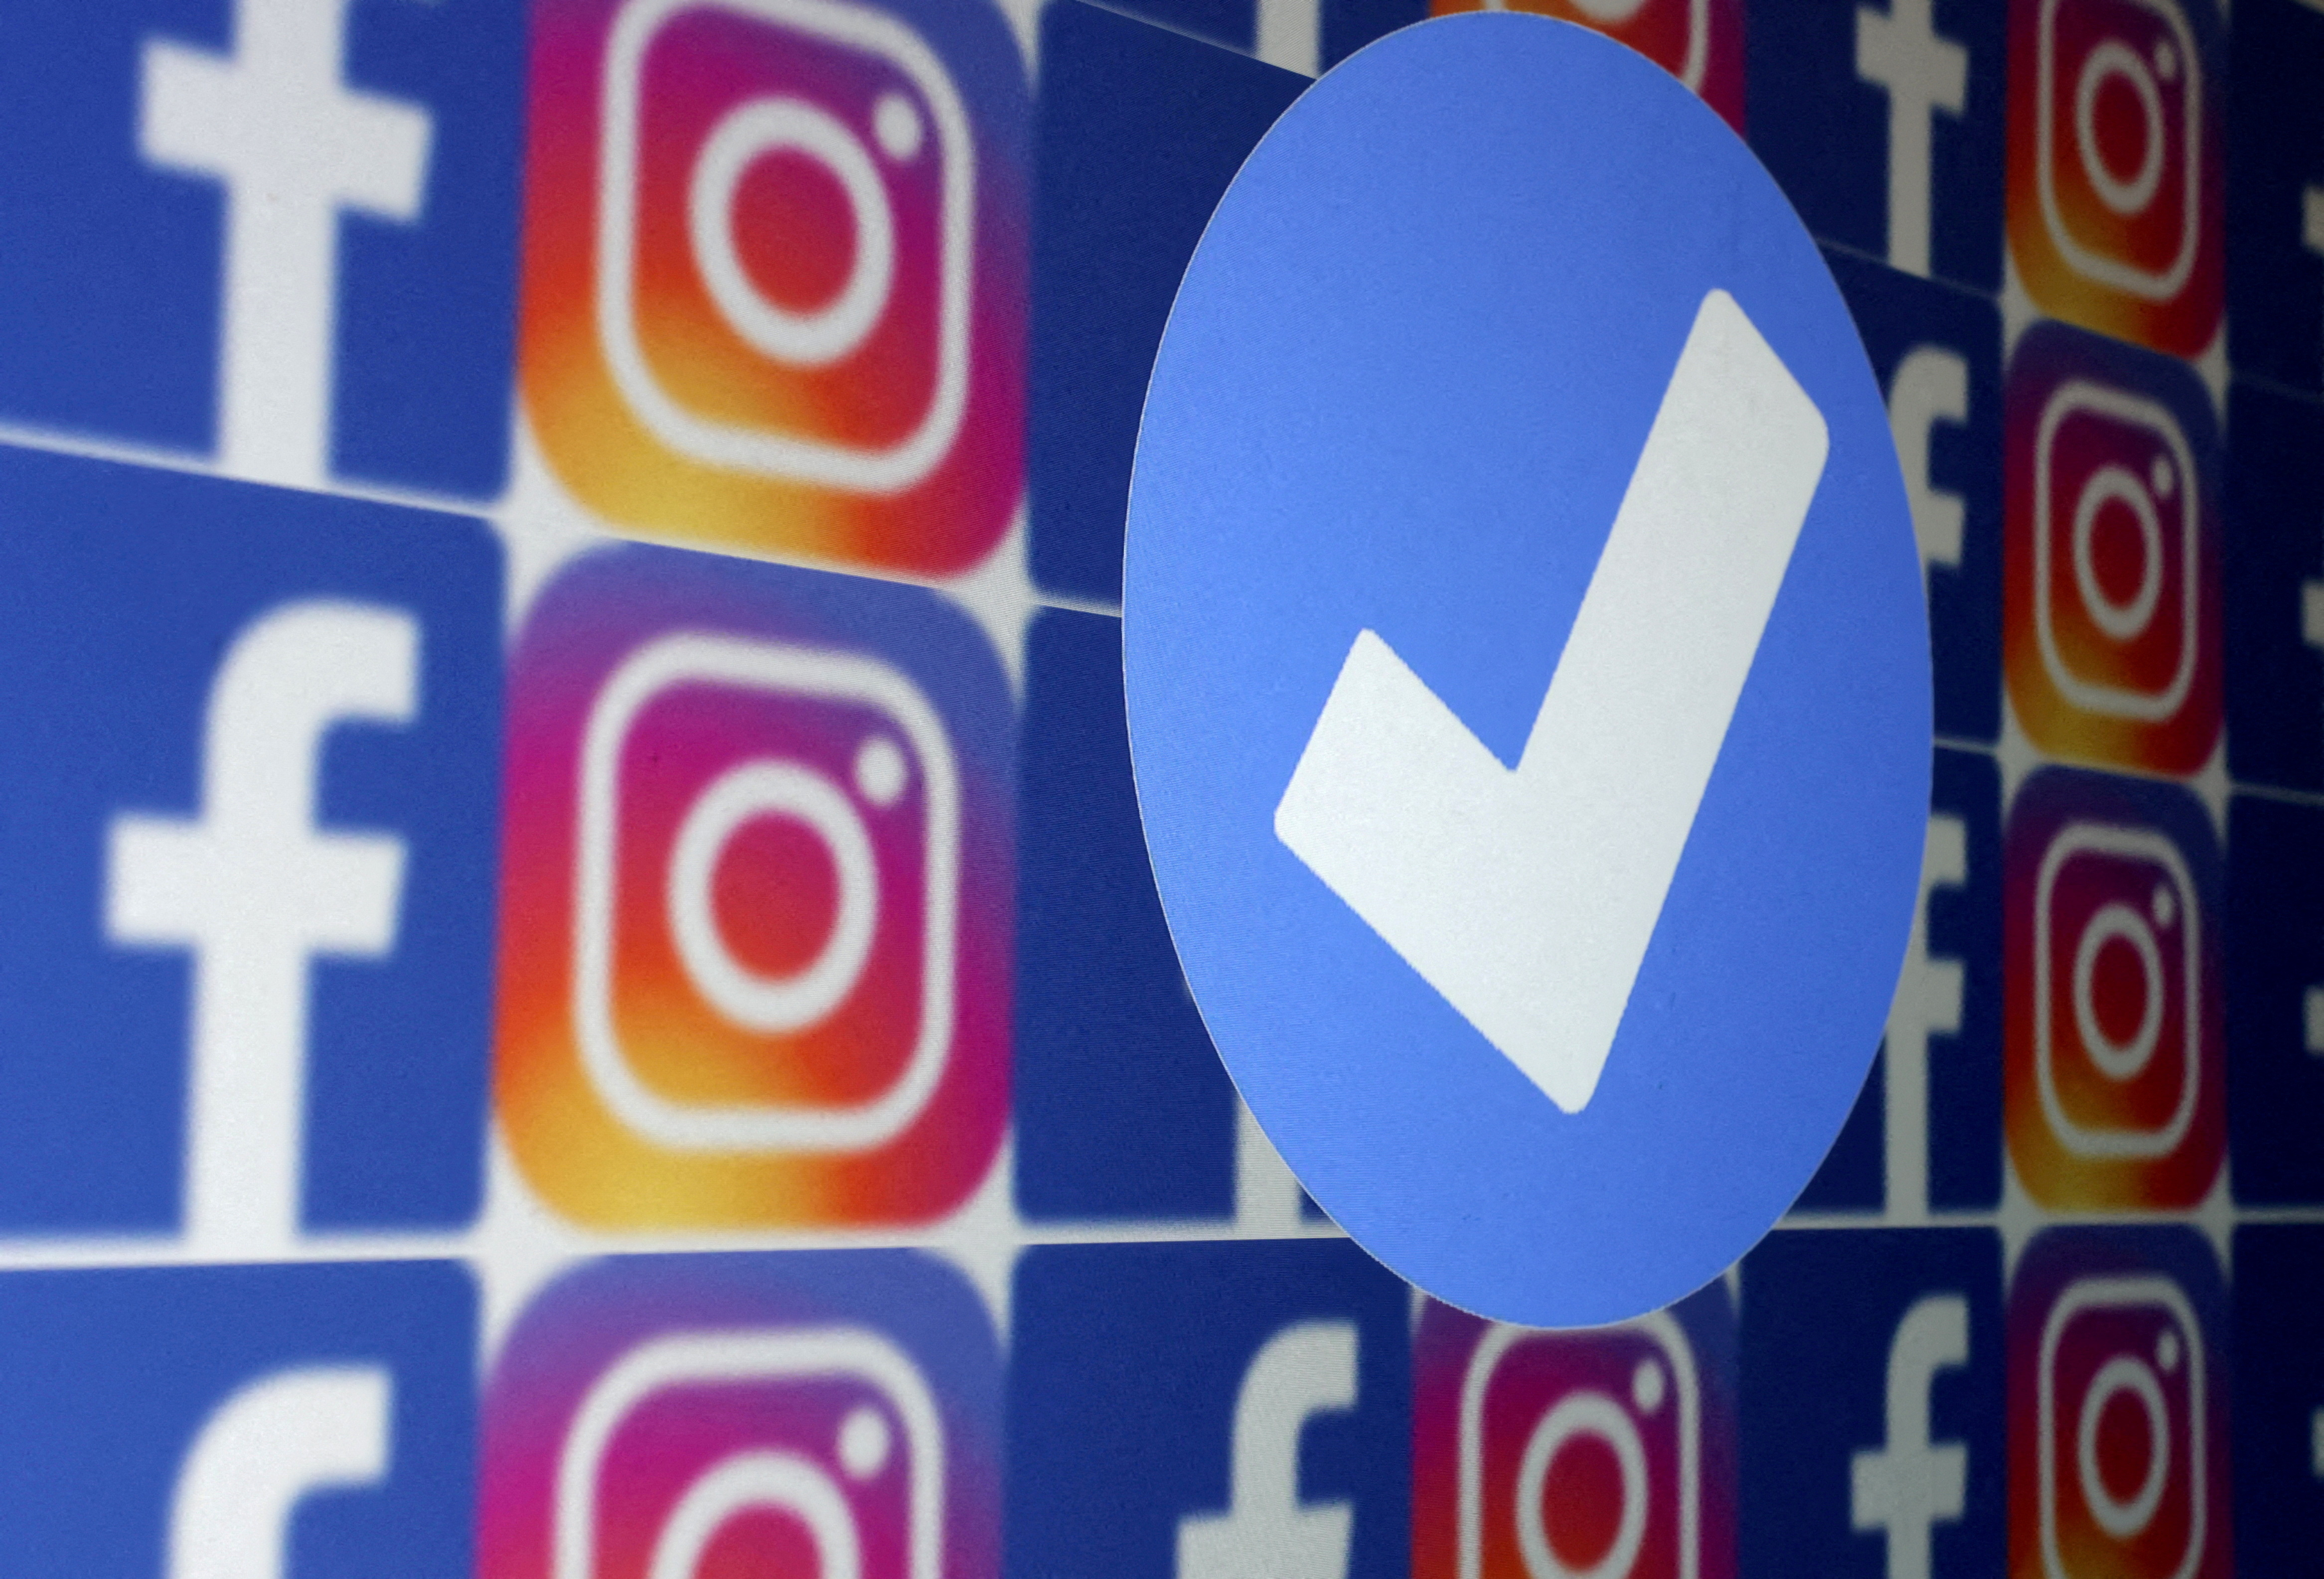 Illustration shows blue verification badge, Facebook and Instagram logos